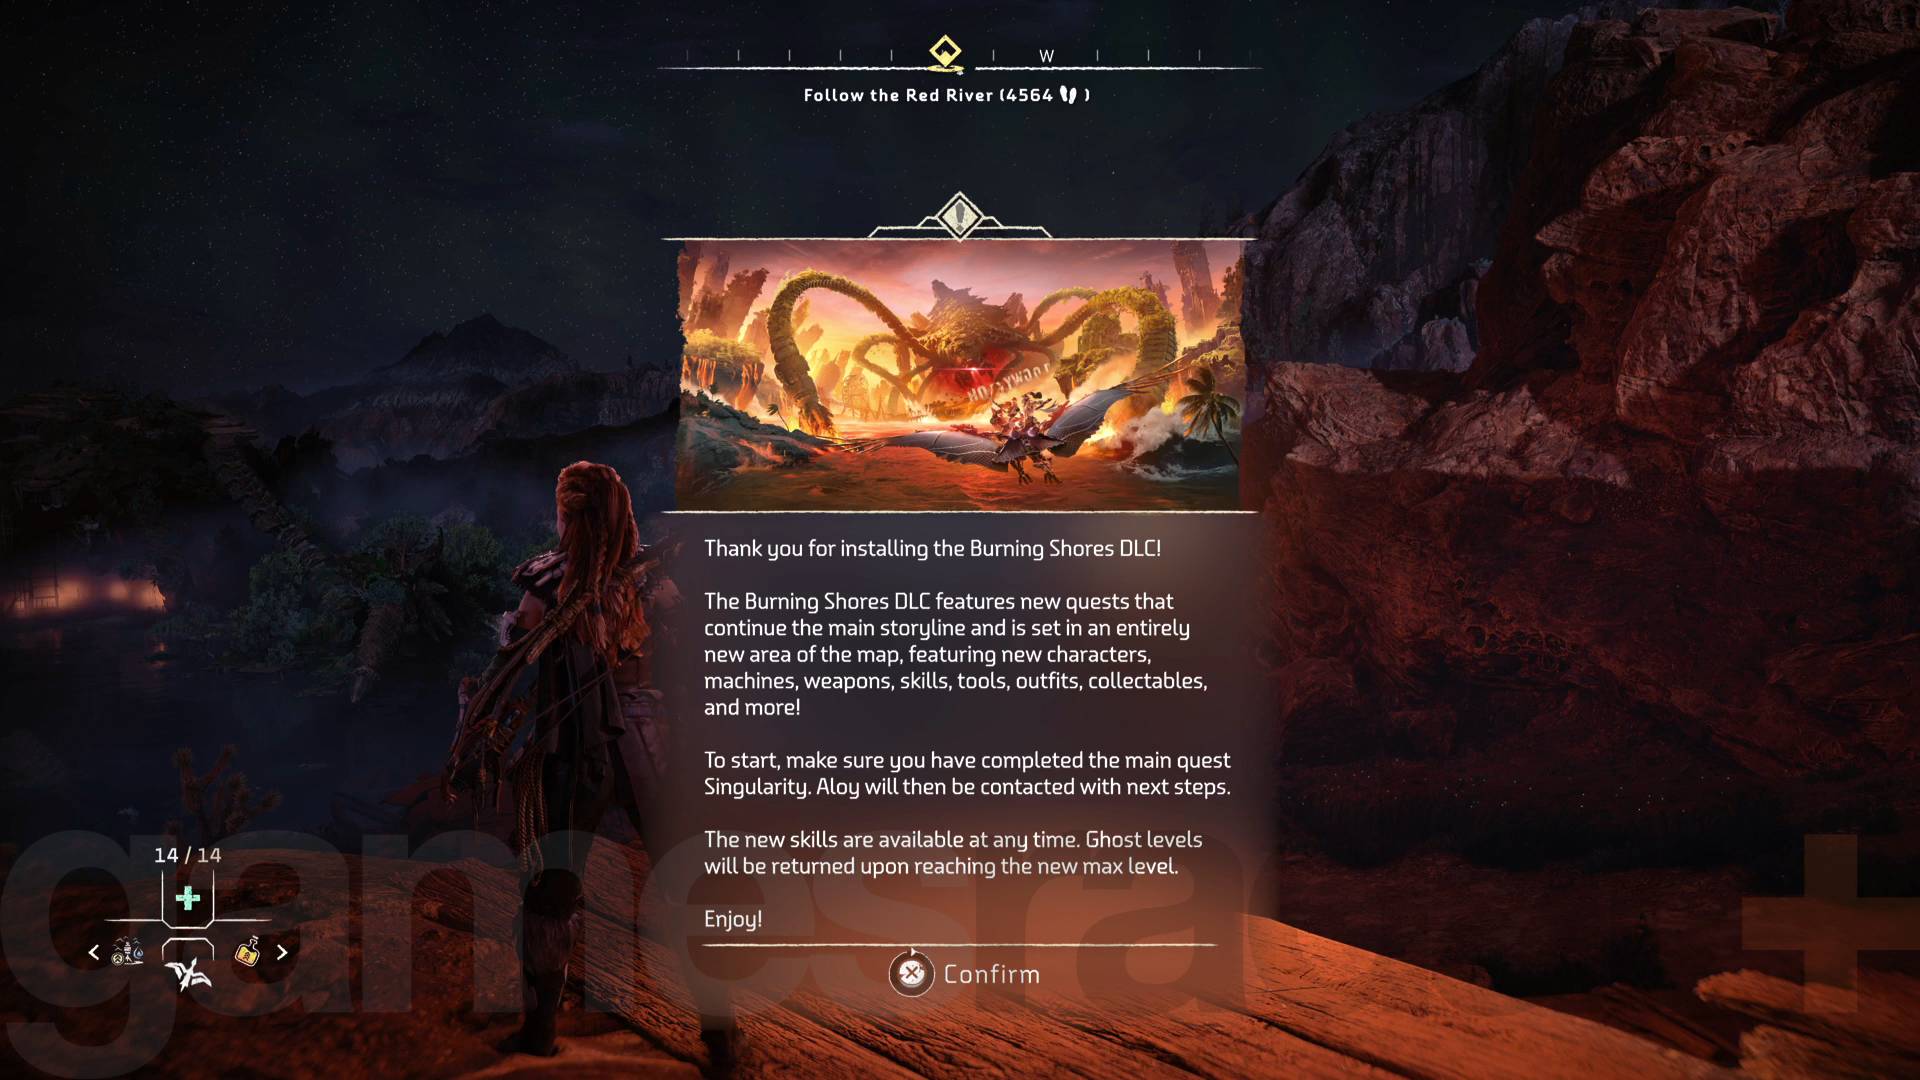 How to access Horizon Forbidden West: Burning Shores DLC